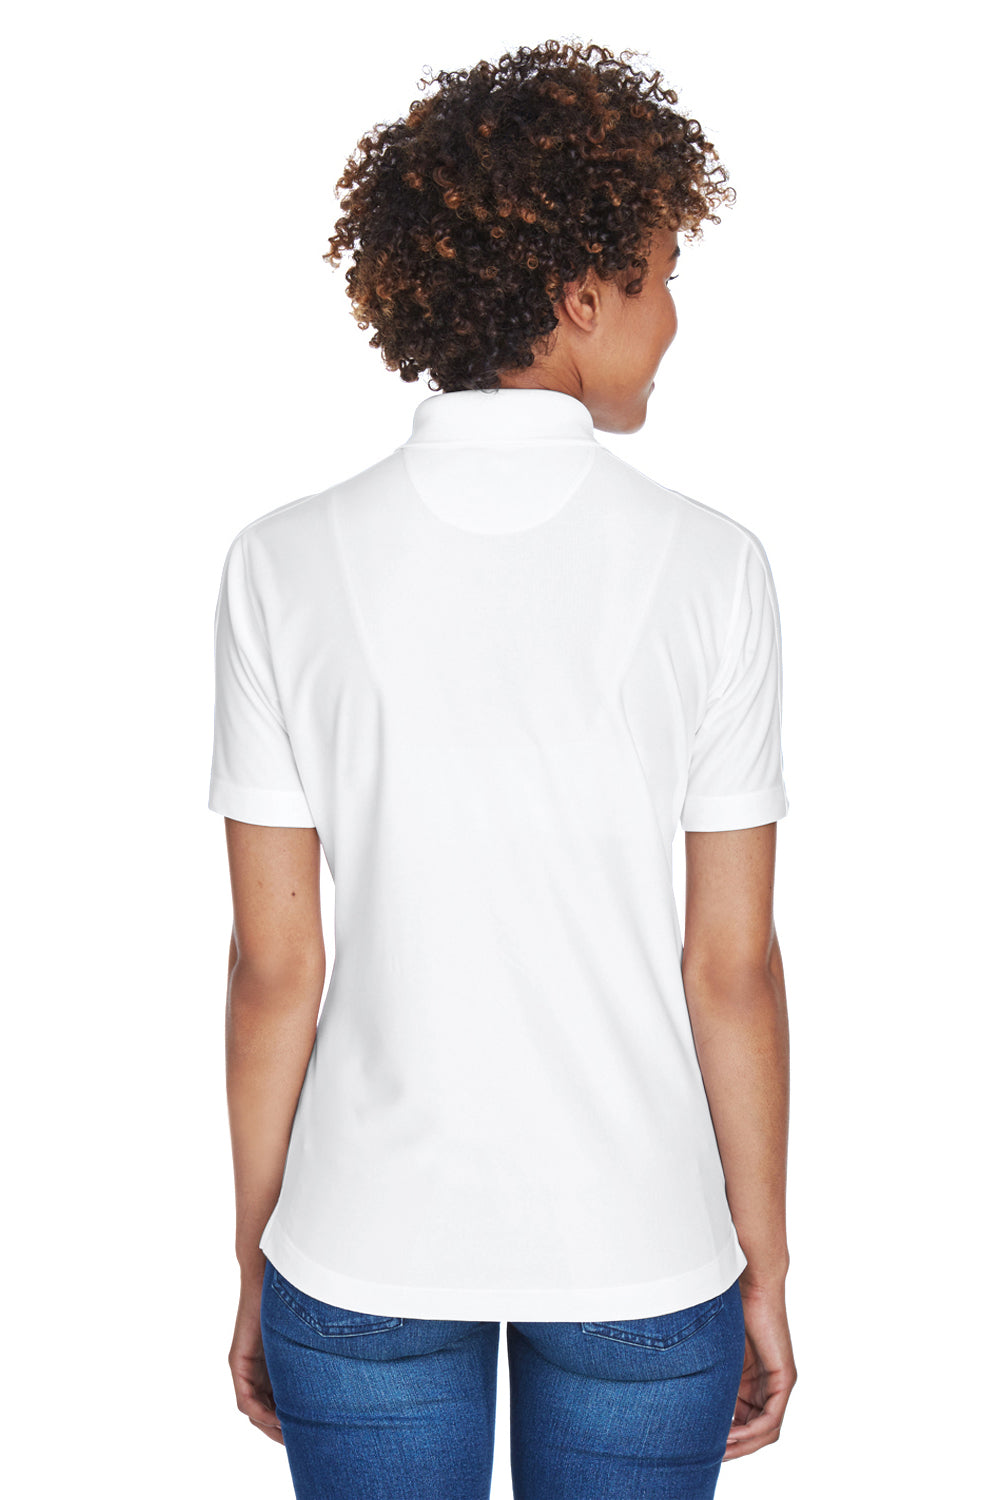 UltraClub 8414 Womens Cool & Dry Elite Performance Moisture Wicking Short Sleeve Polo Shirt White Back